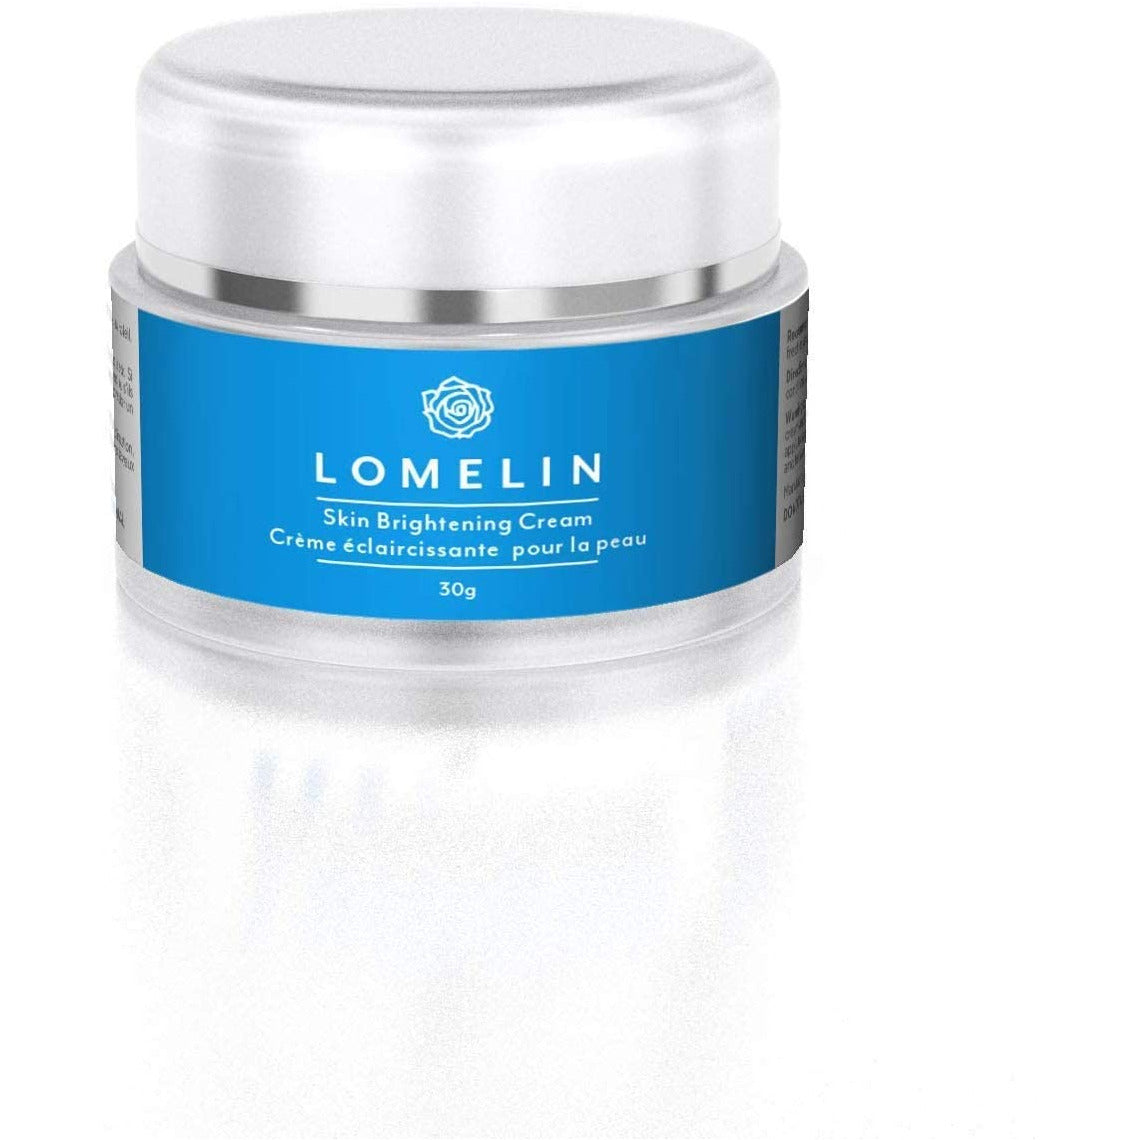 Lomelin Skin Brightening Cream